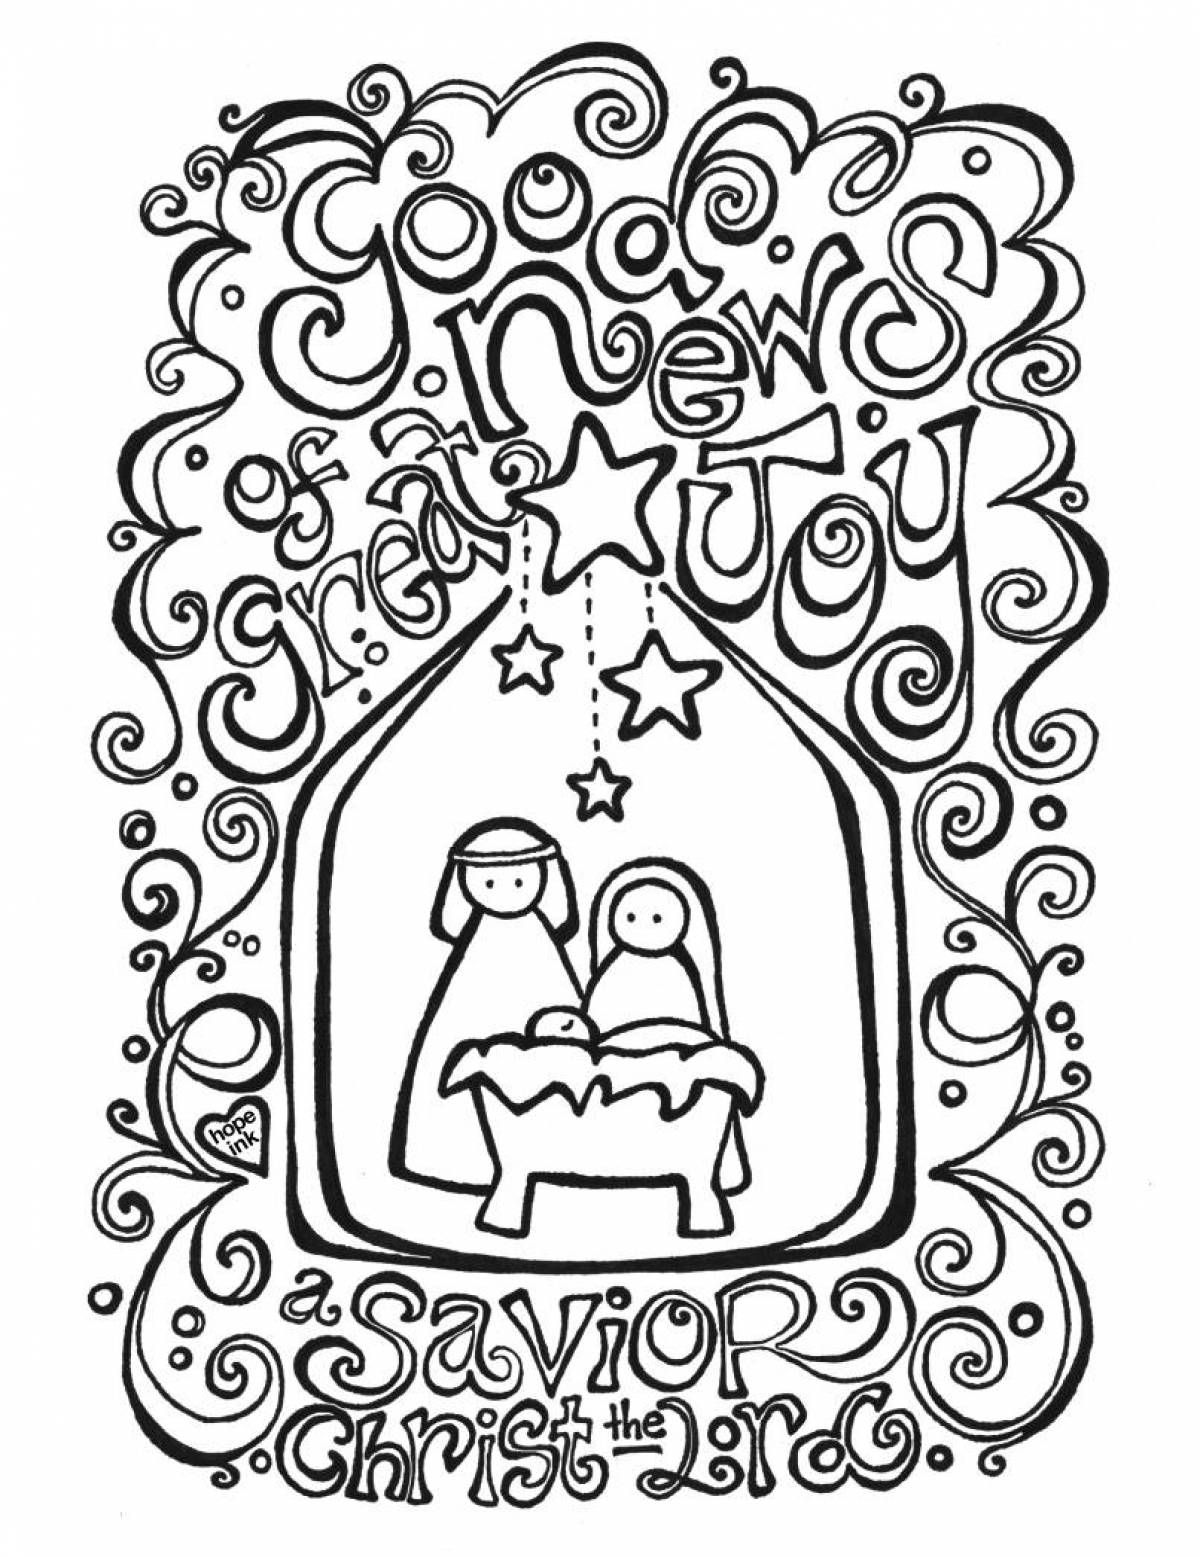 Nativity scene shining coloring book